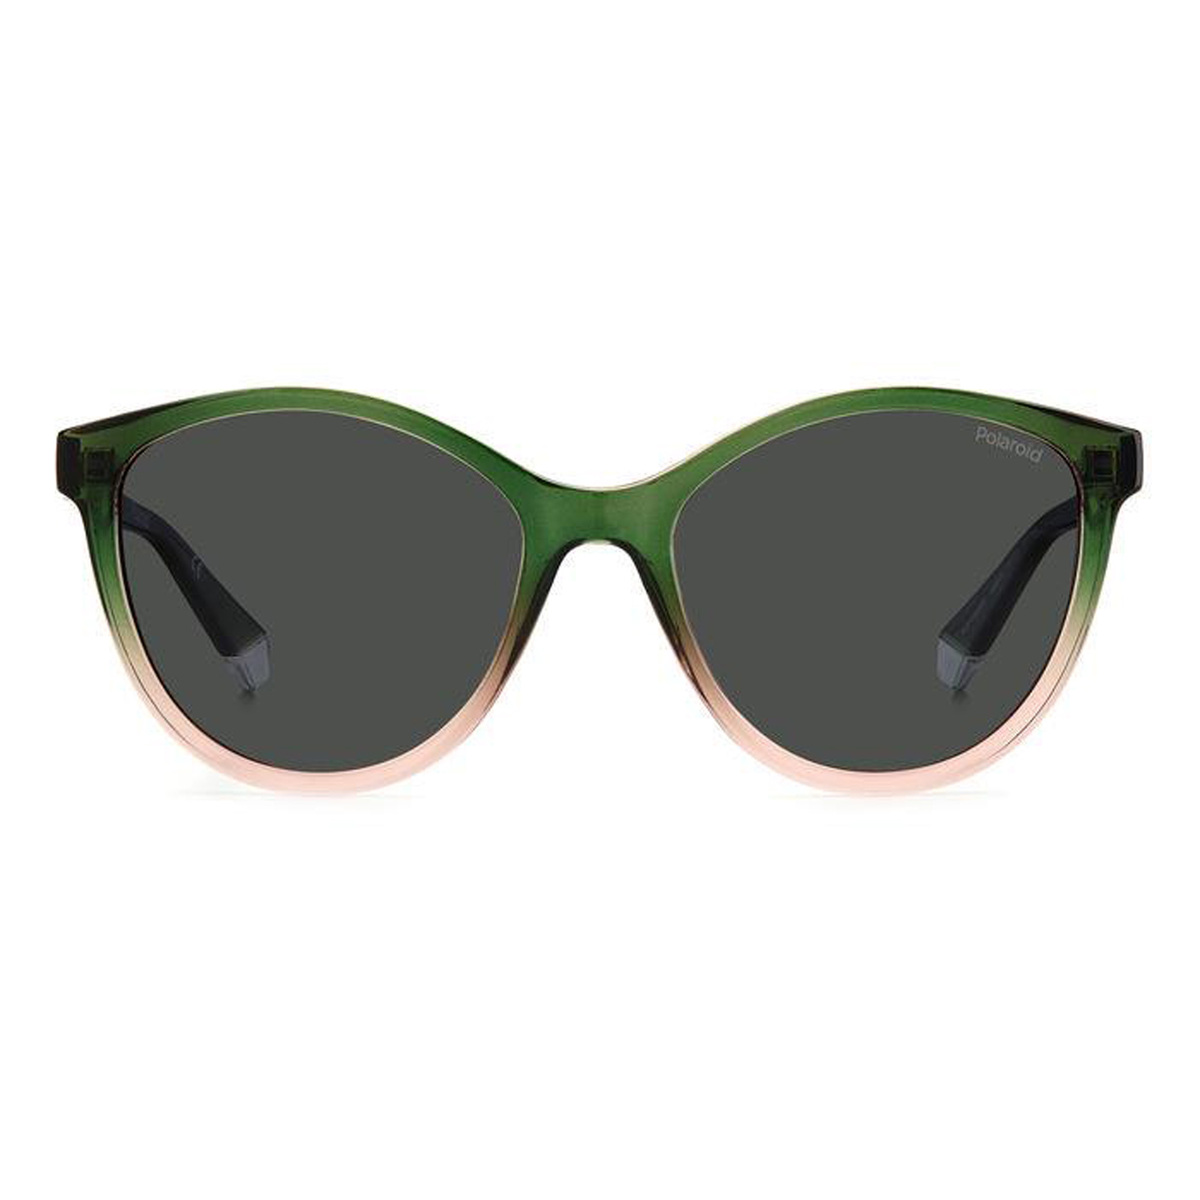 Polaroid Women's Round Sunglasses, Black, 4133SX IWB